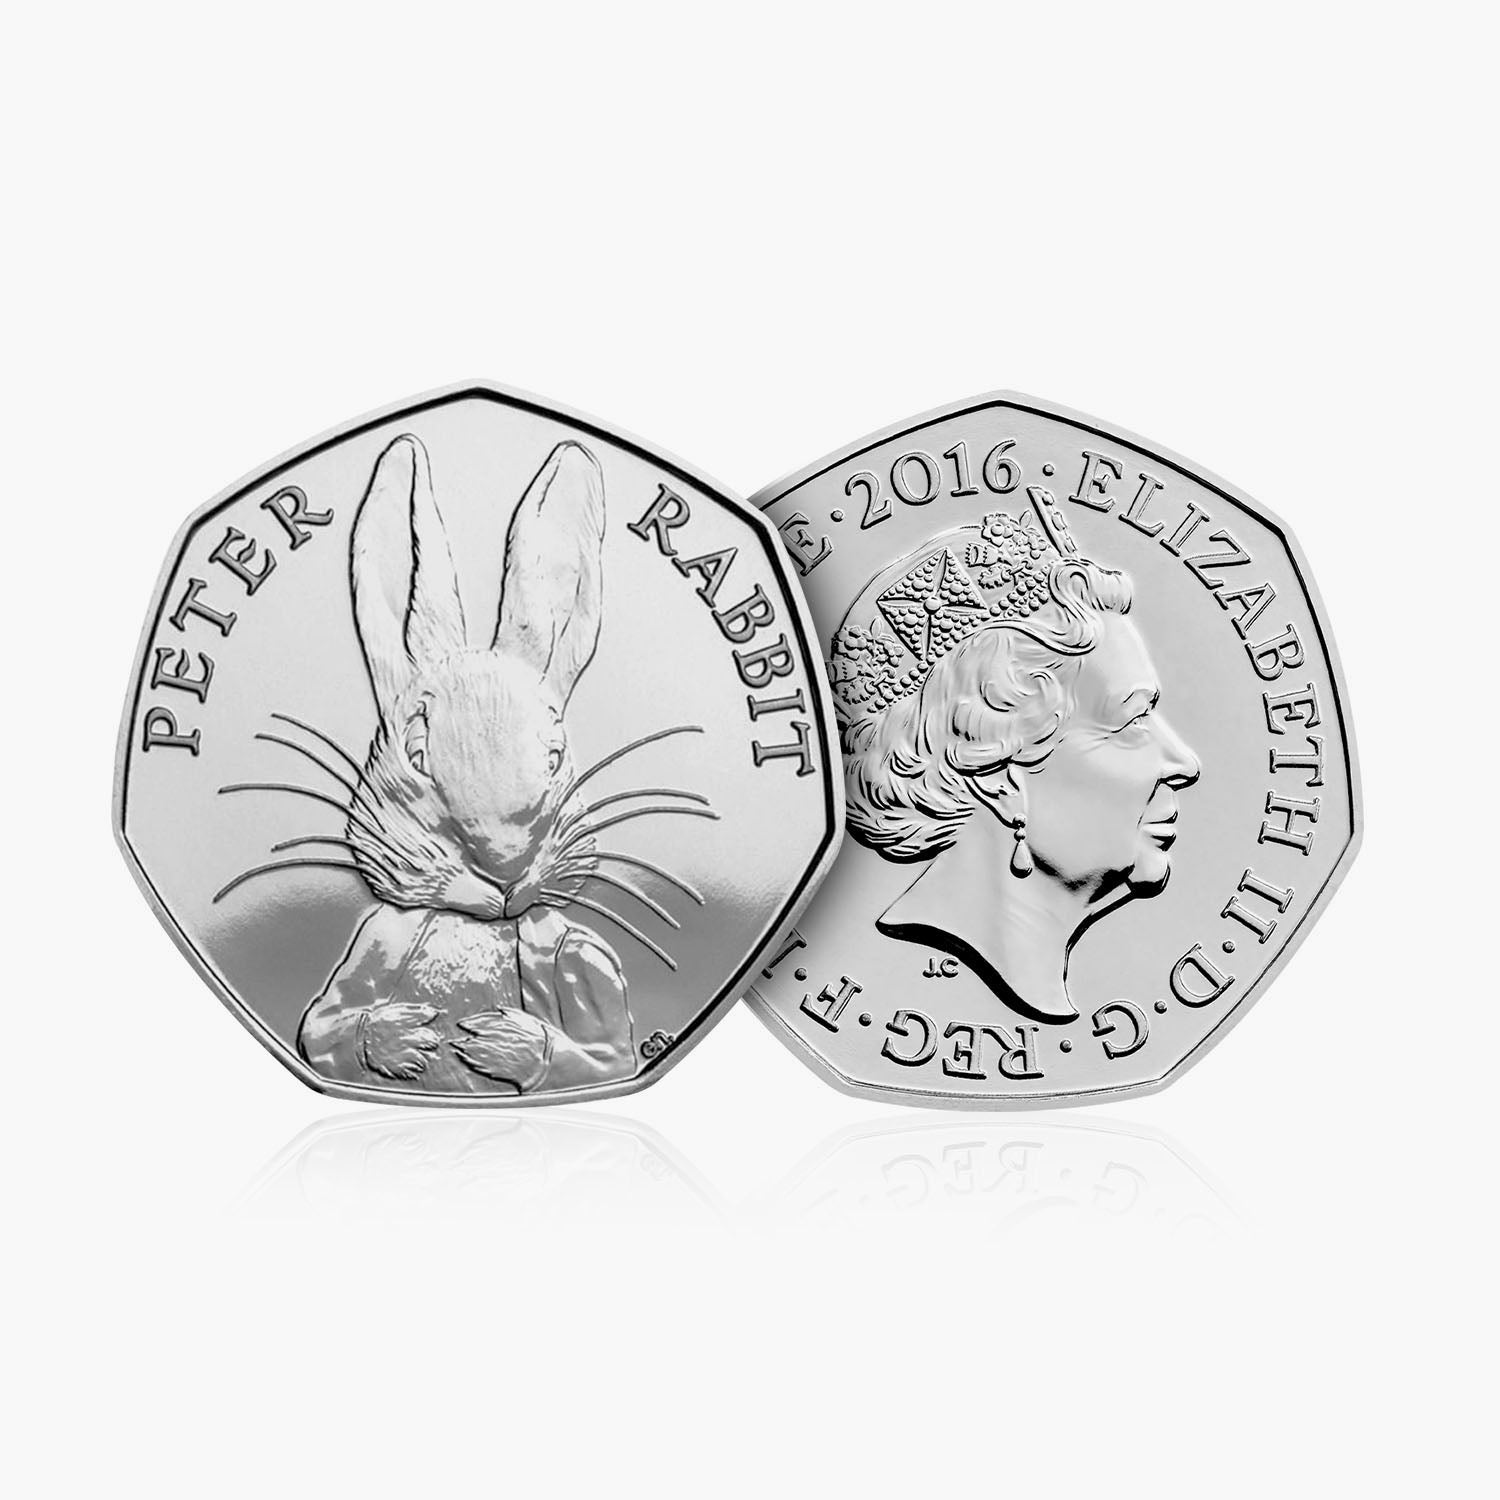 2016 Circulated Beatrix Potter series - Peter Rabbit 50p Coin